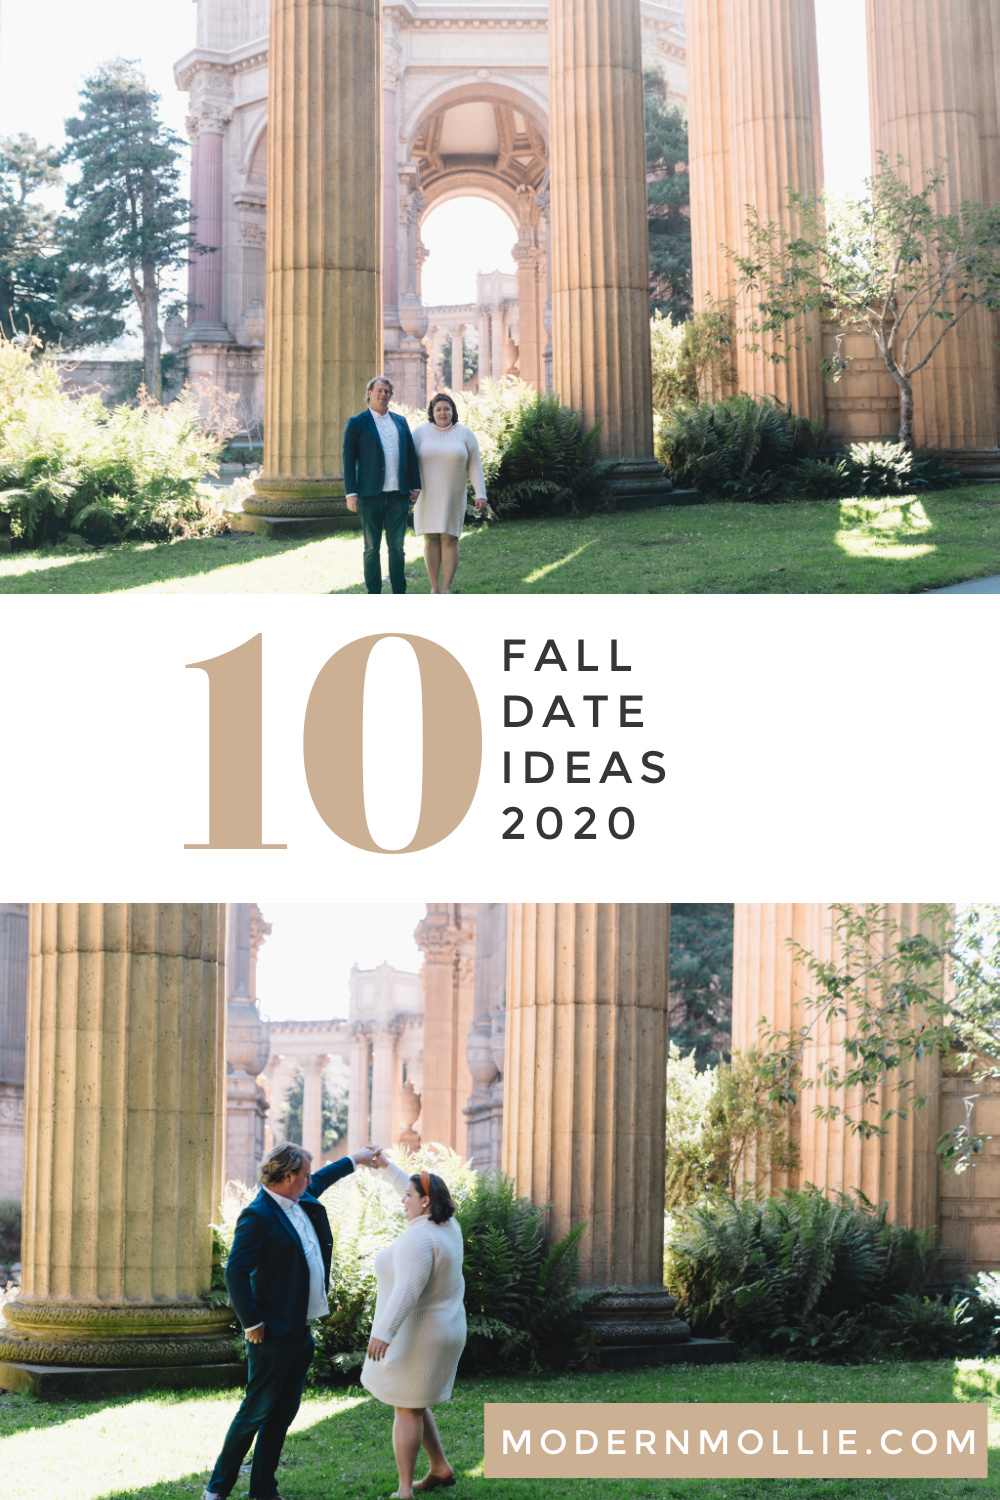 Fall Date Ideas 2020